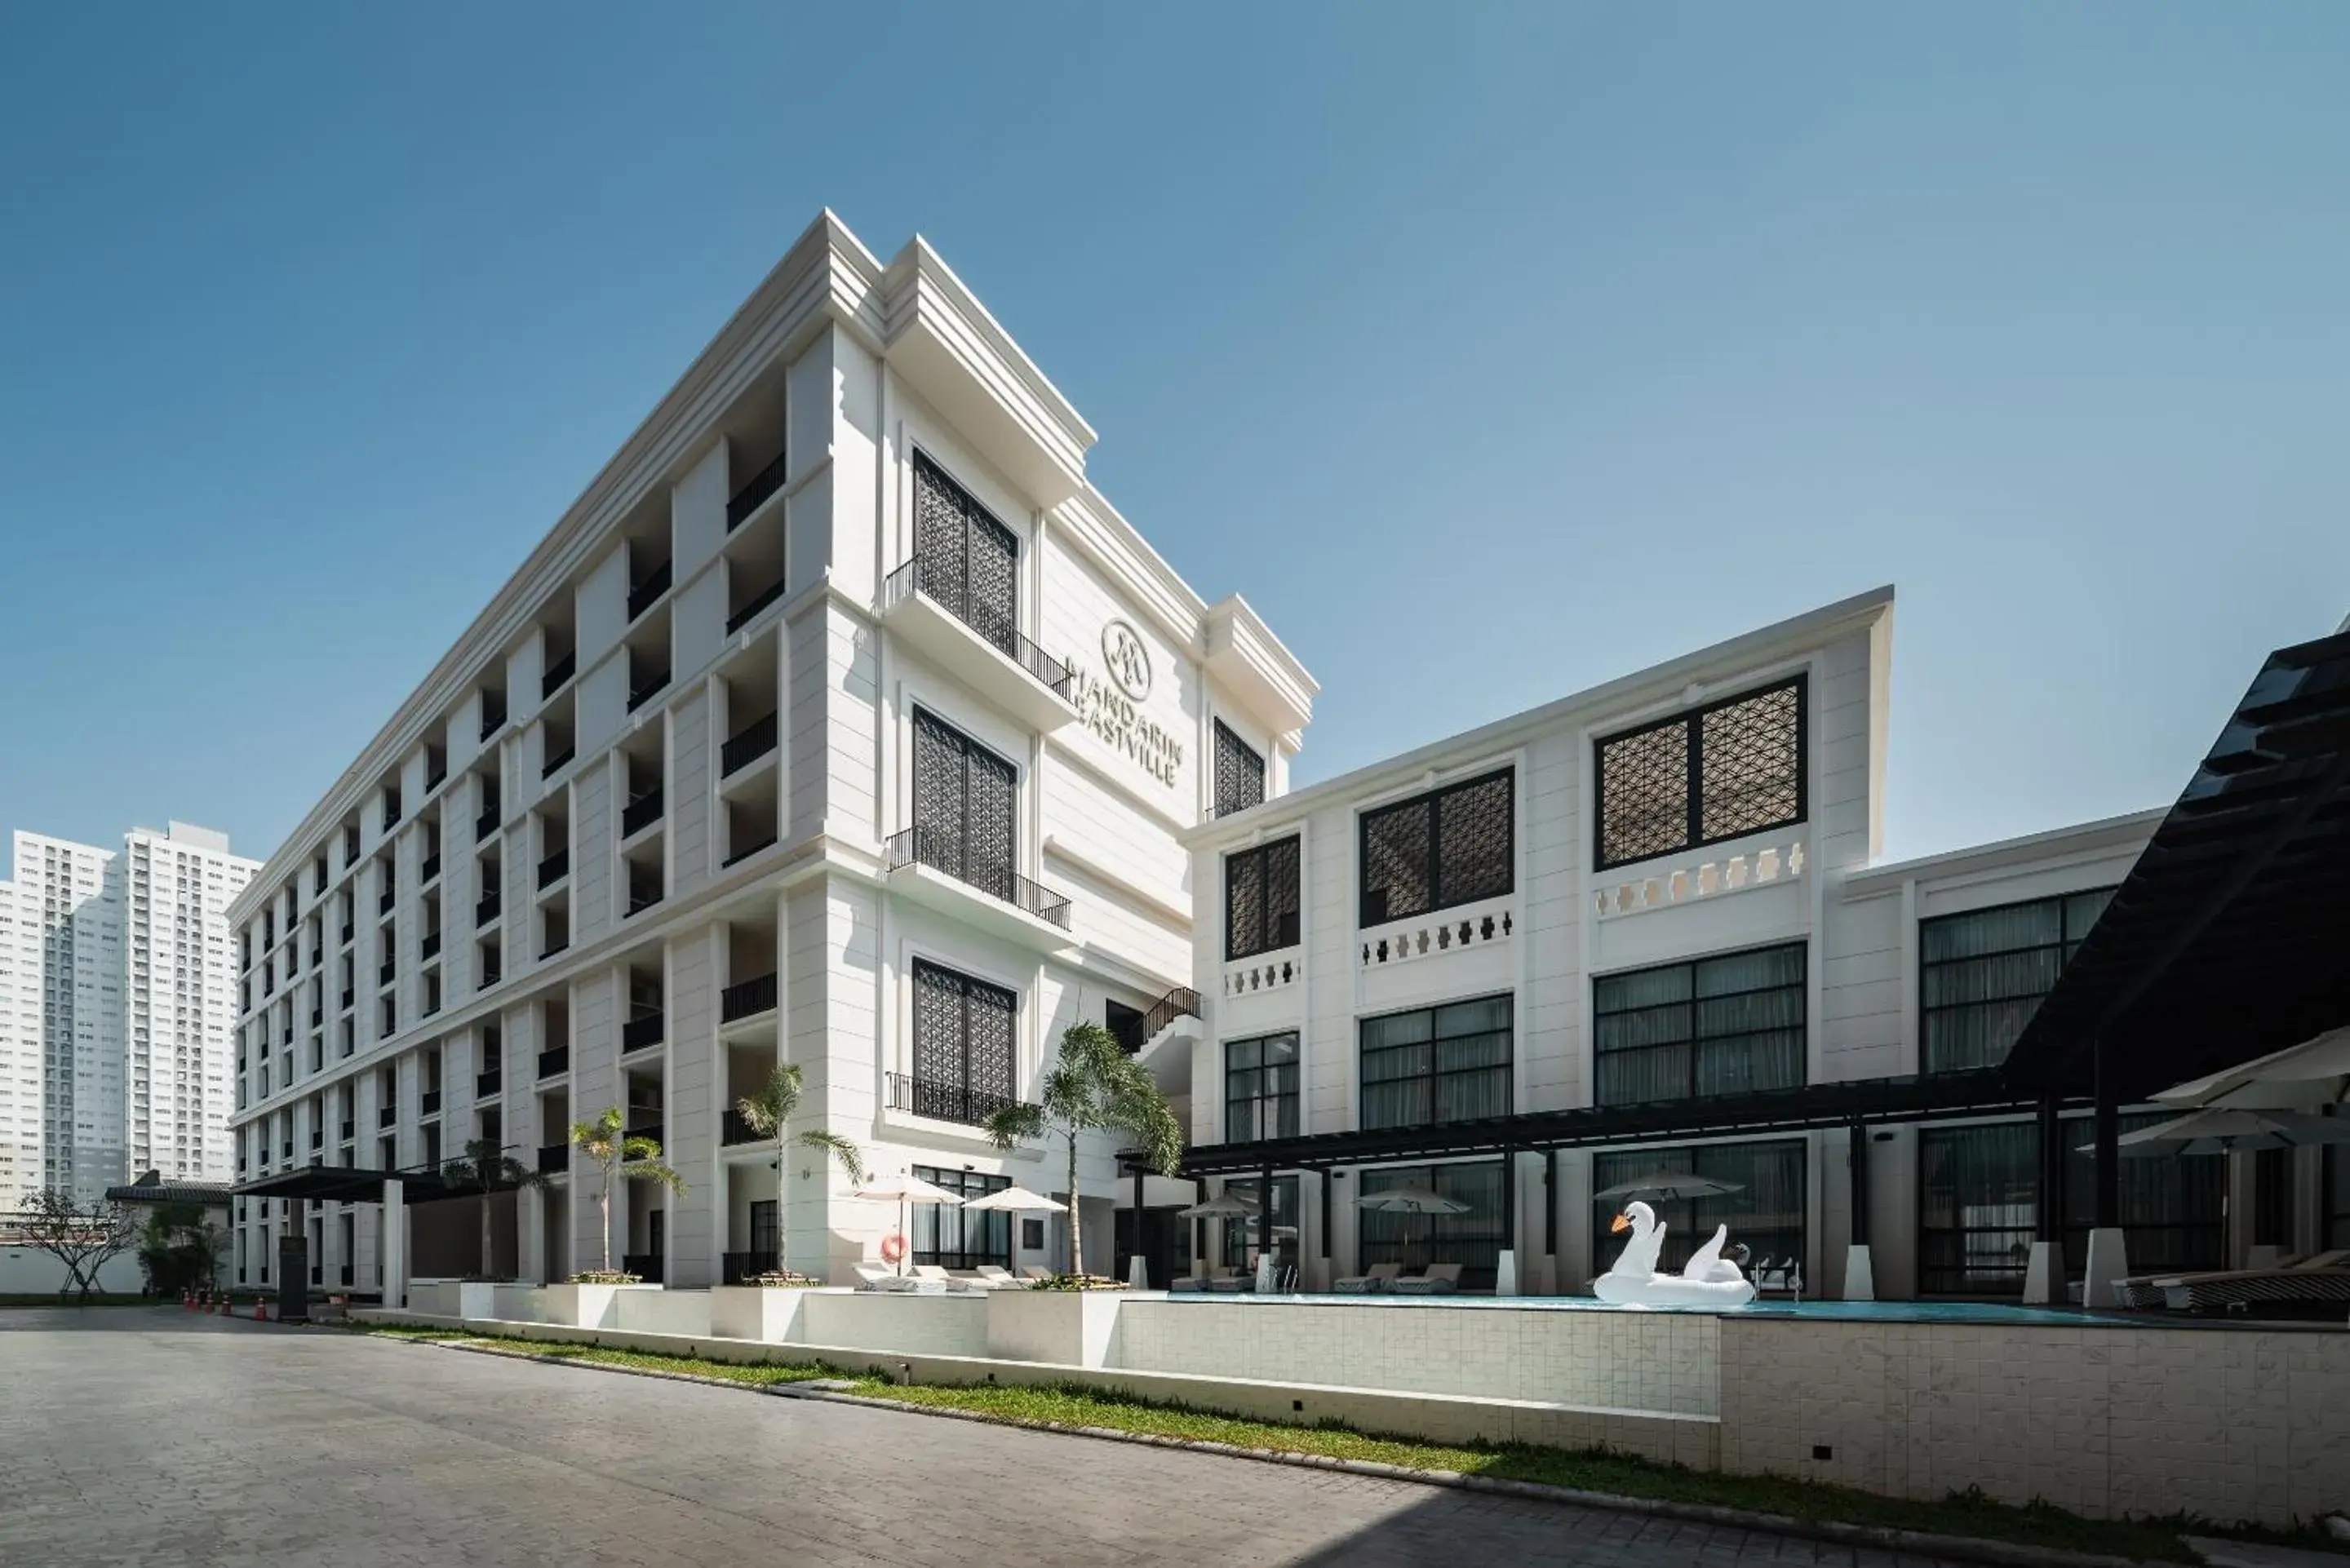 Property building in Mandarin Eastville, Pattaya - SHA Extra Plus